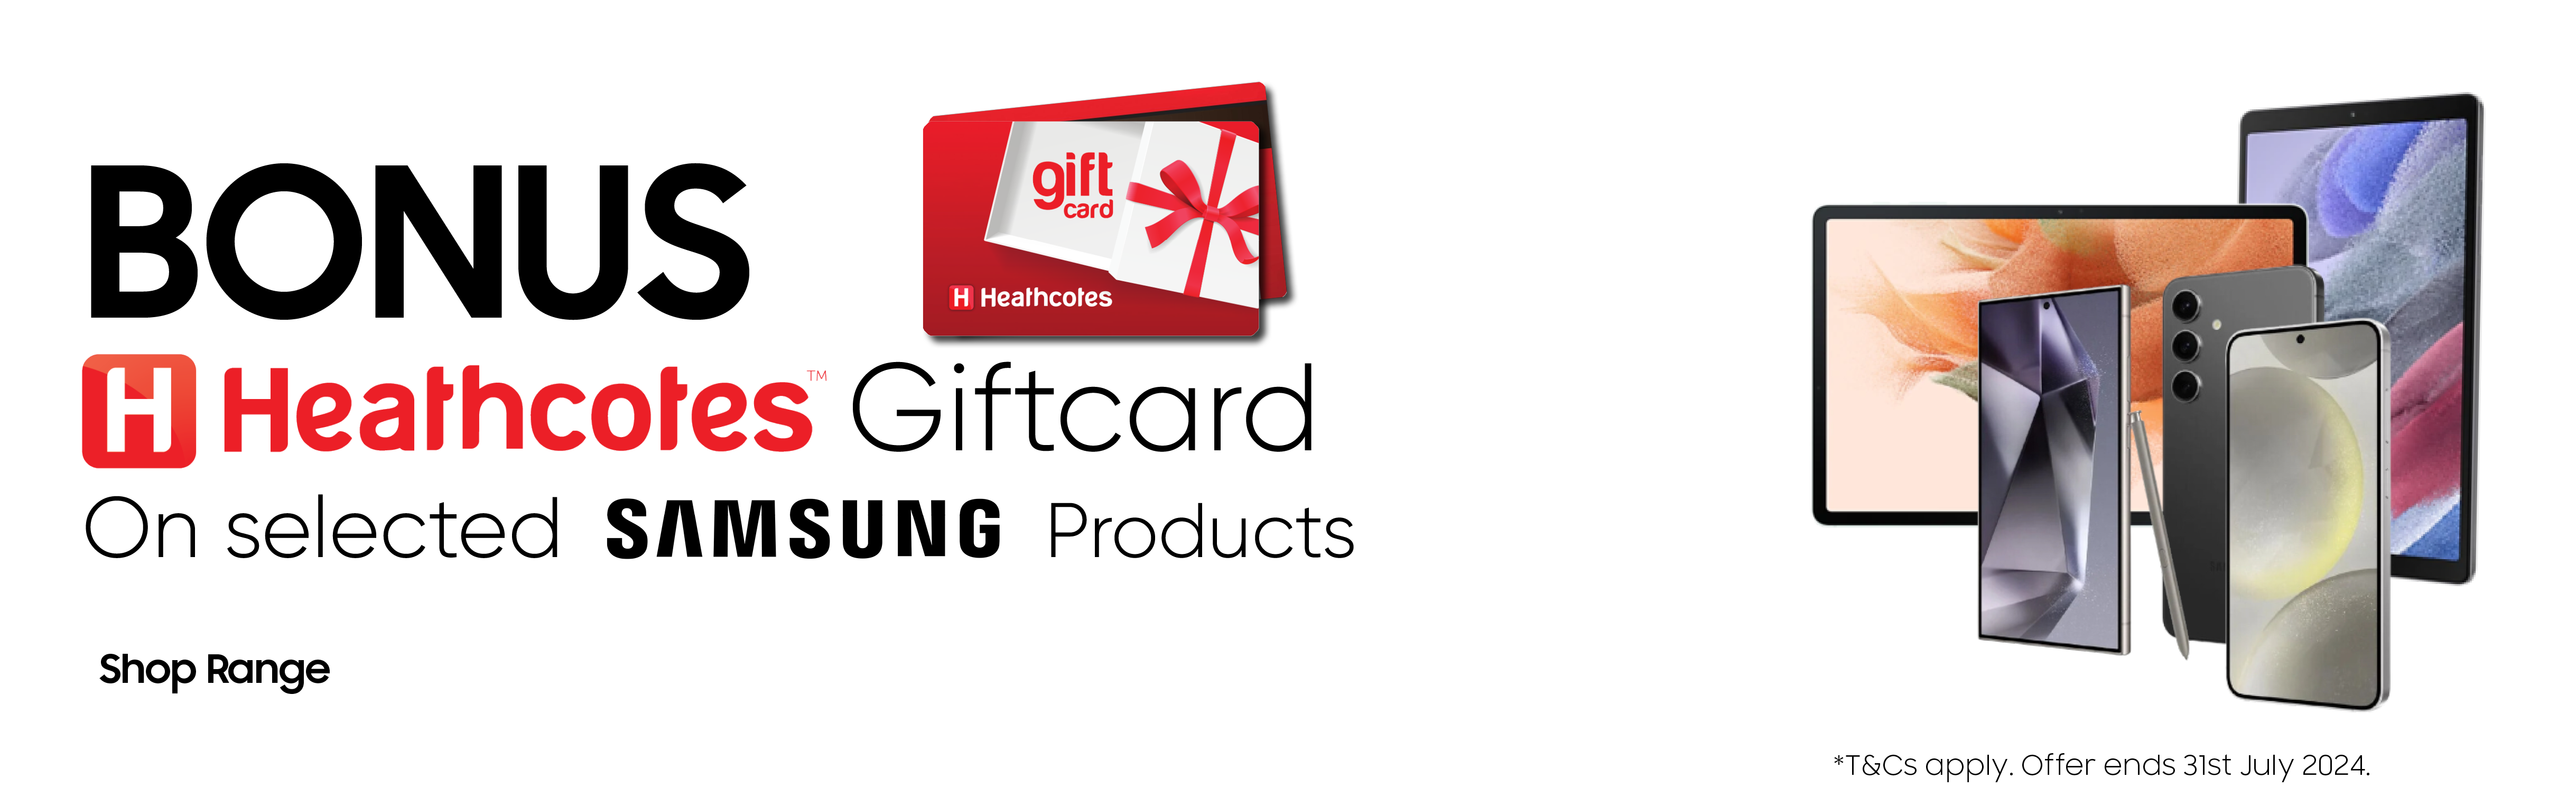 Samsung phone july bonus gift card promotion   headers2